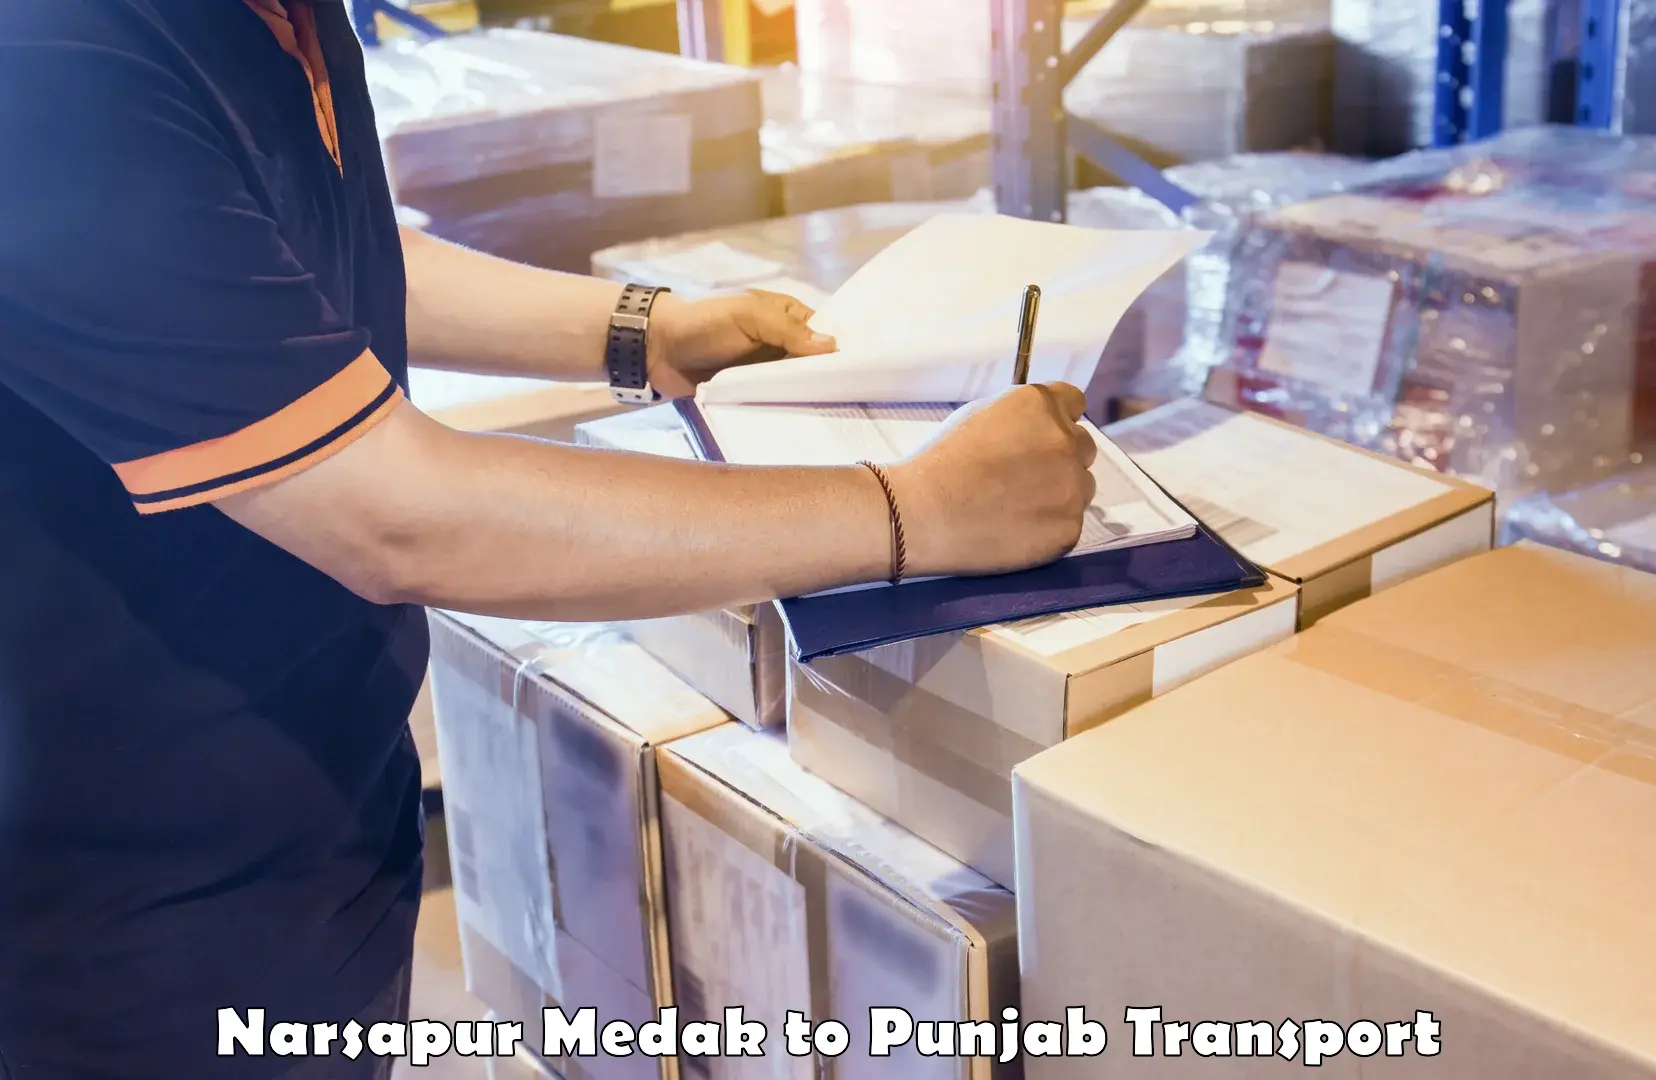 Pick up transport service Narsapur Medak to Jalandhar